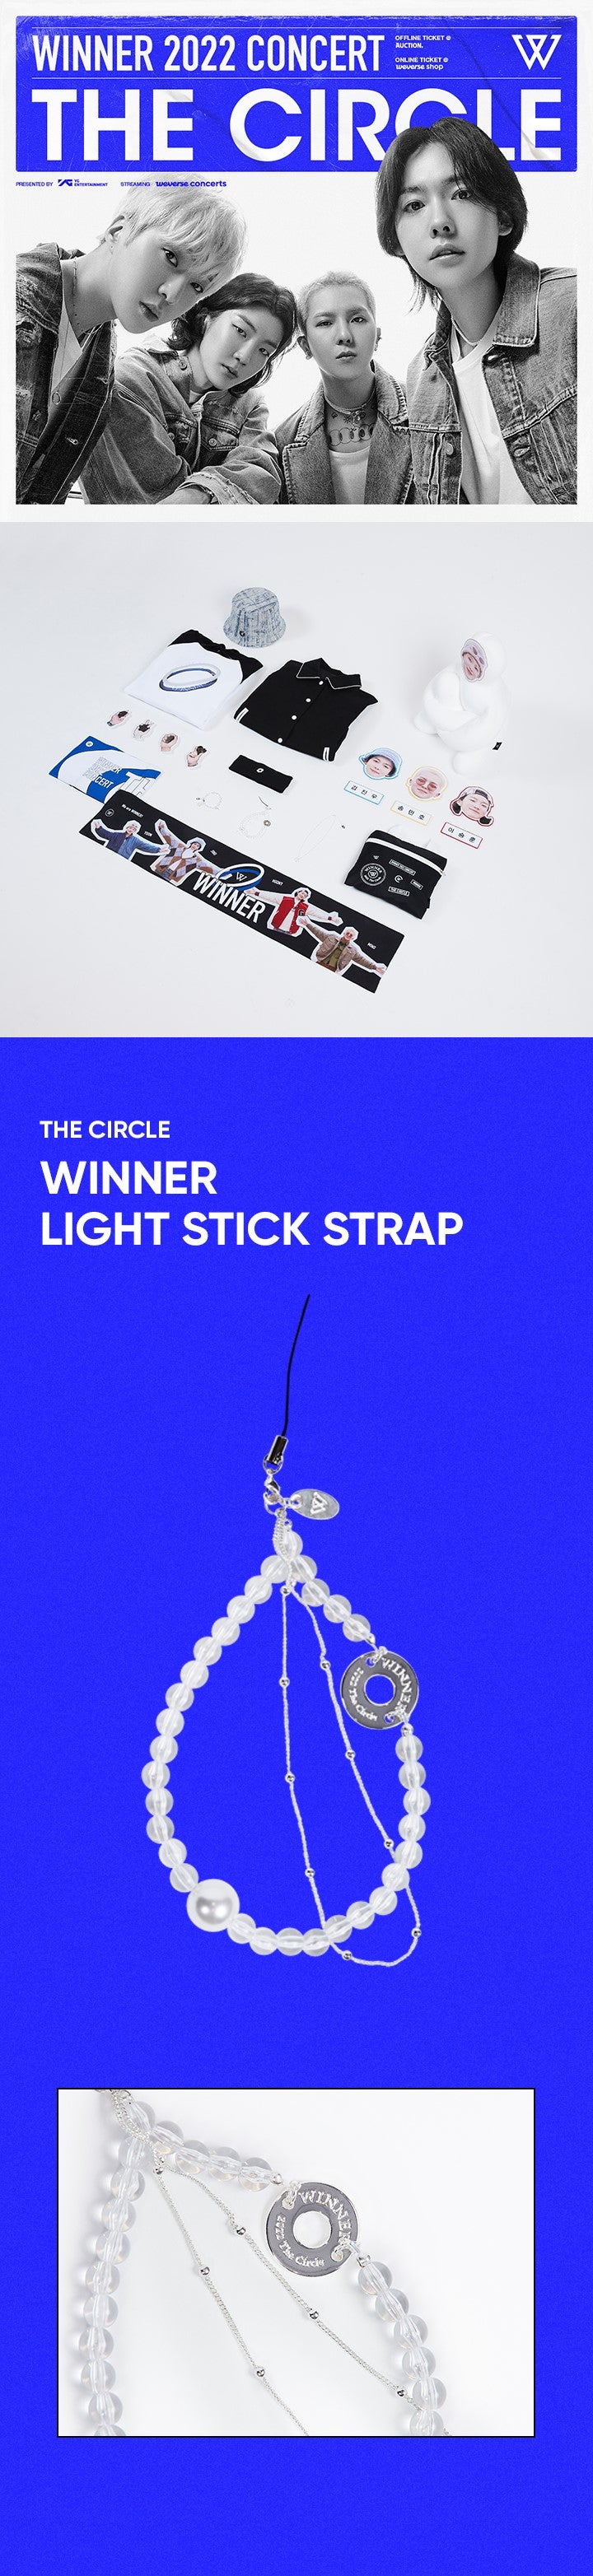 WINNER [THE CIRCLE] Lightstick Strap